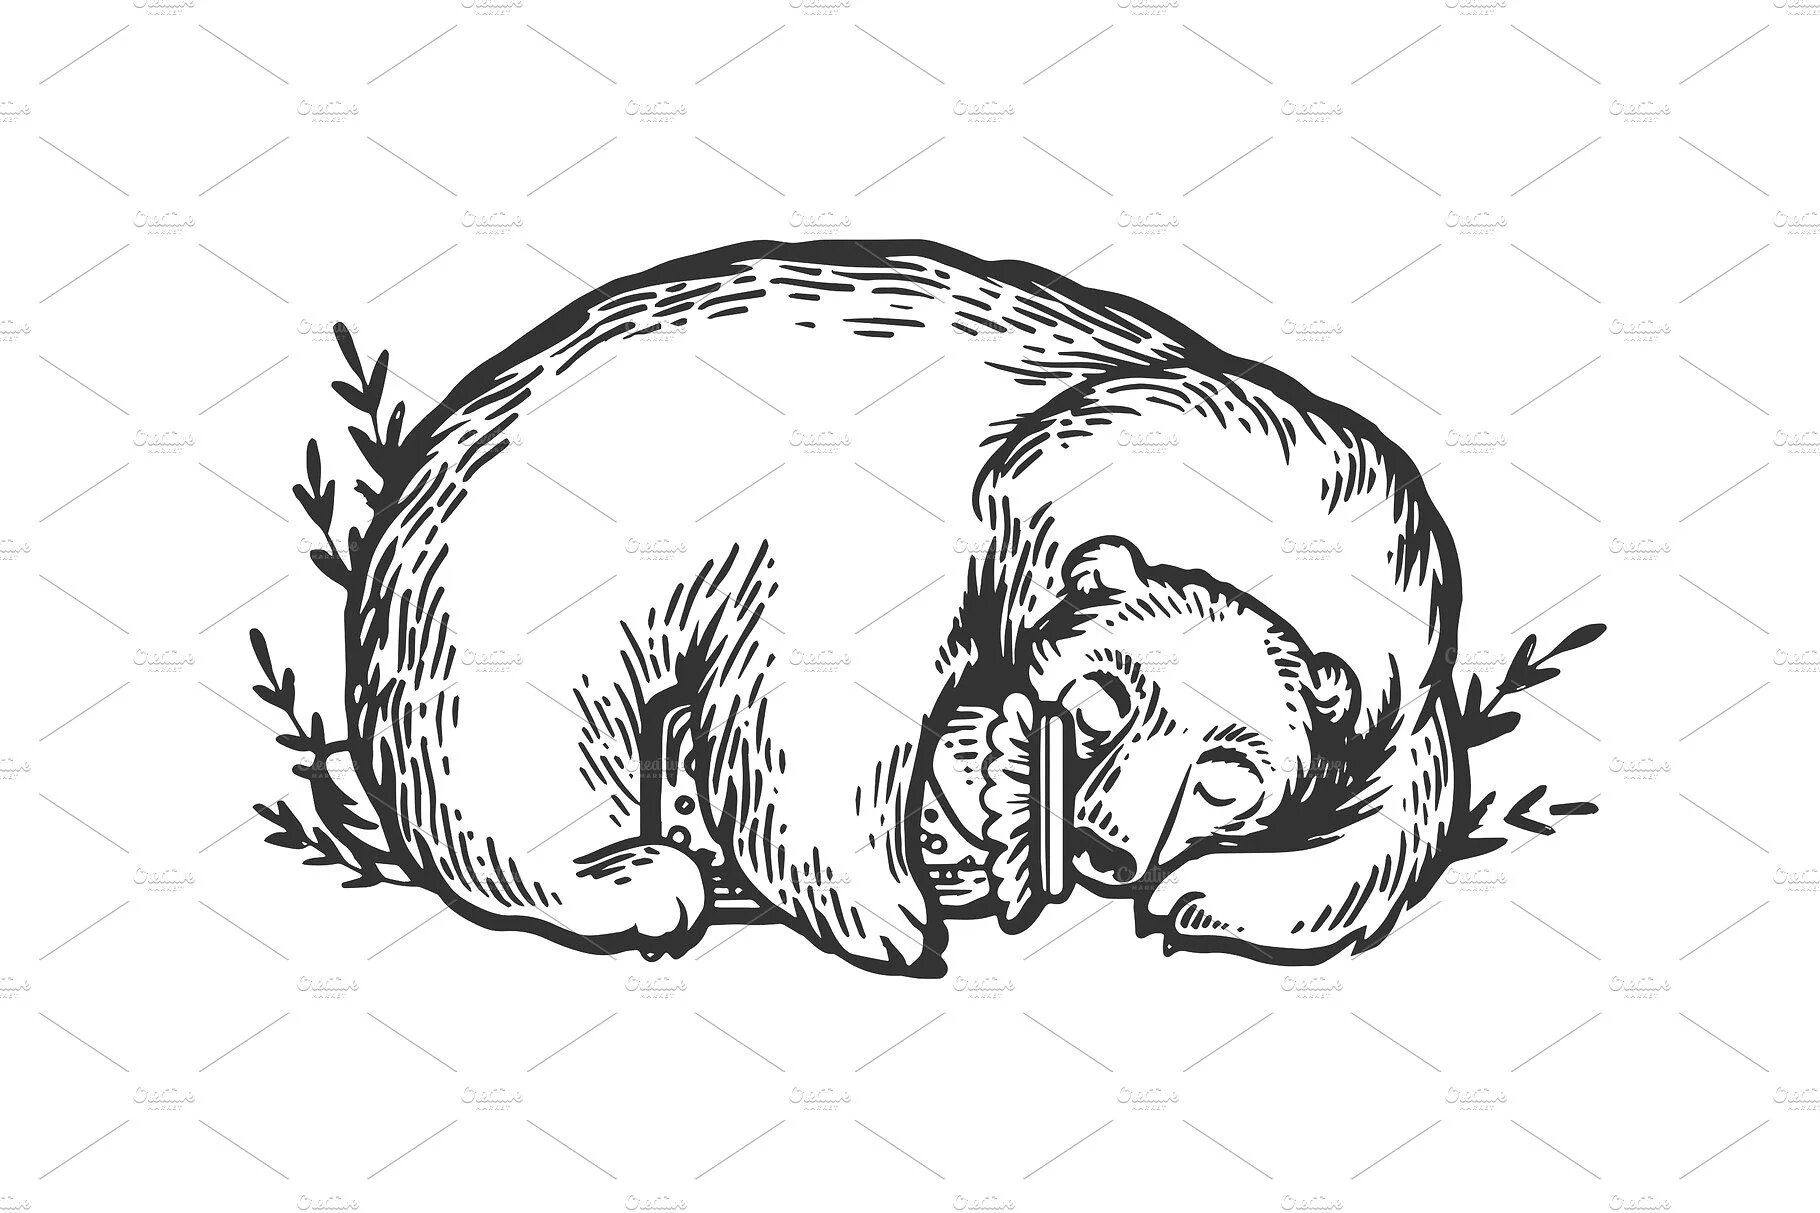 Grand coloring page: почему медведи спят зимой?